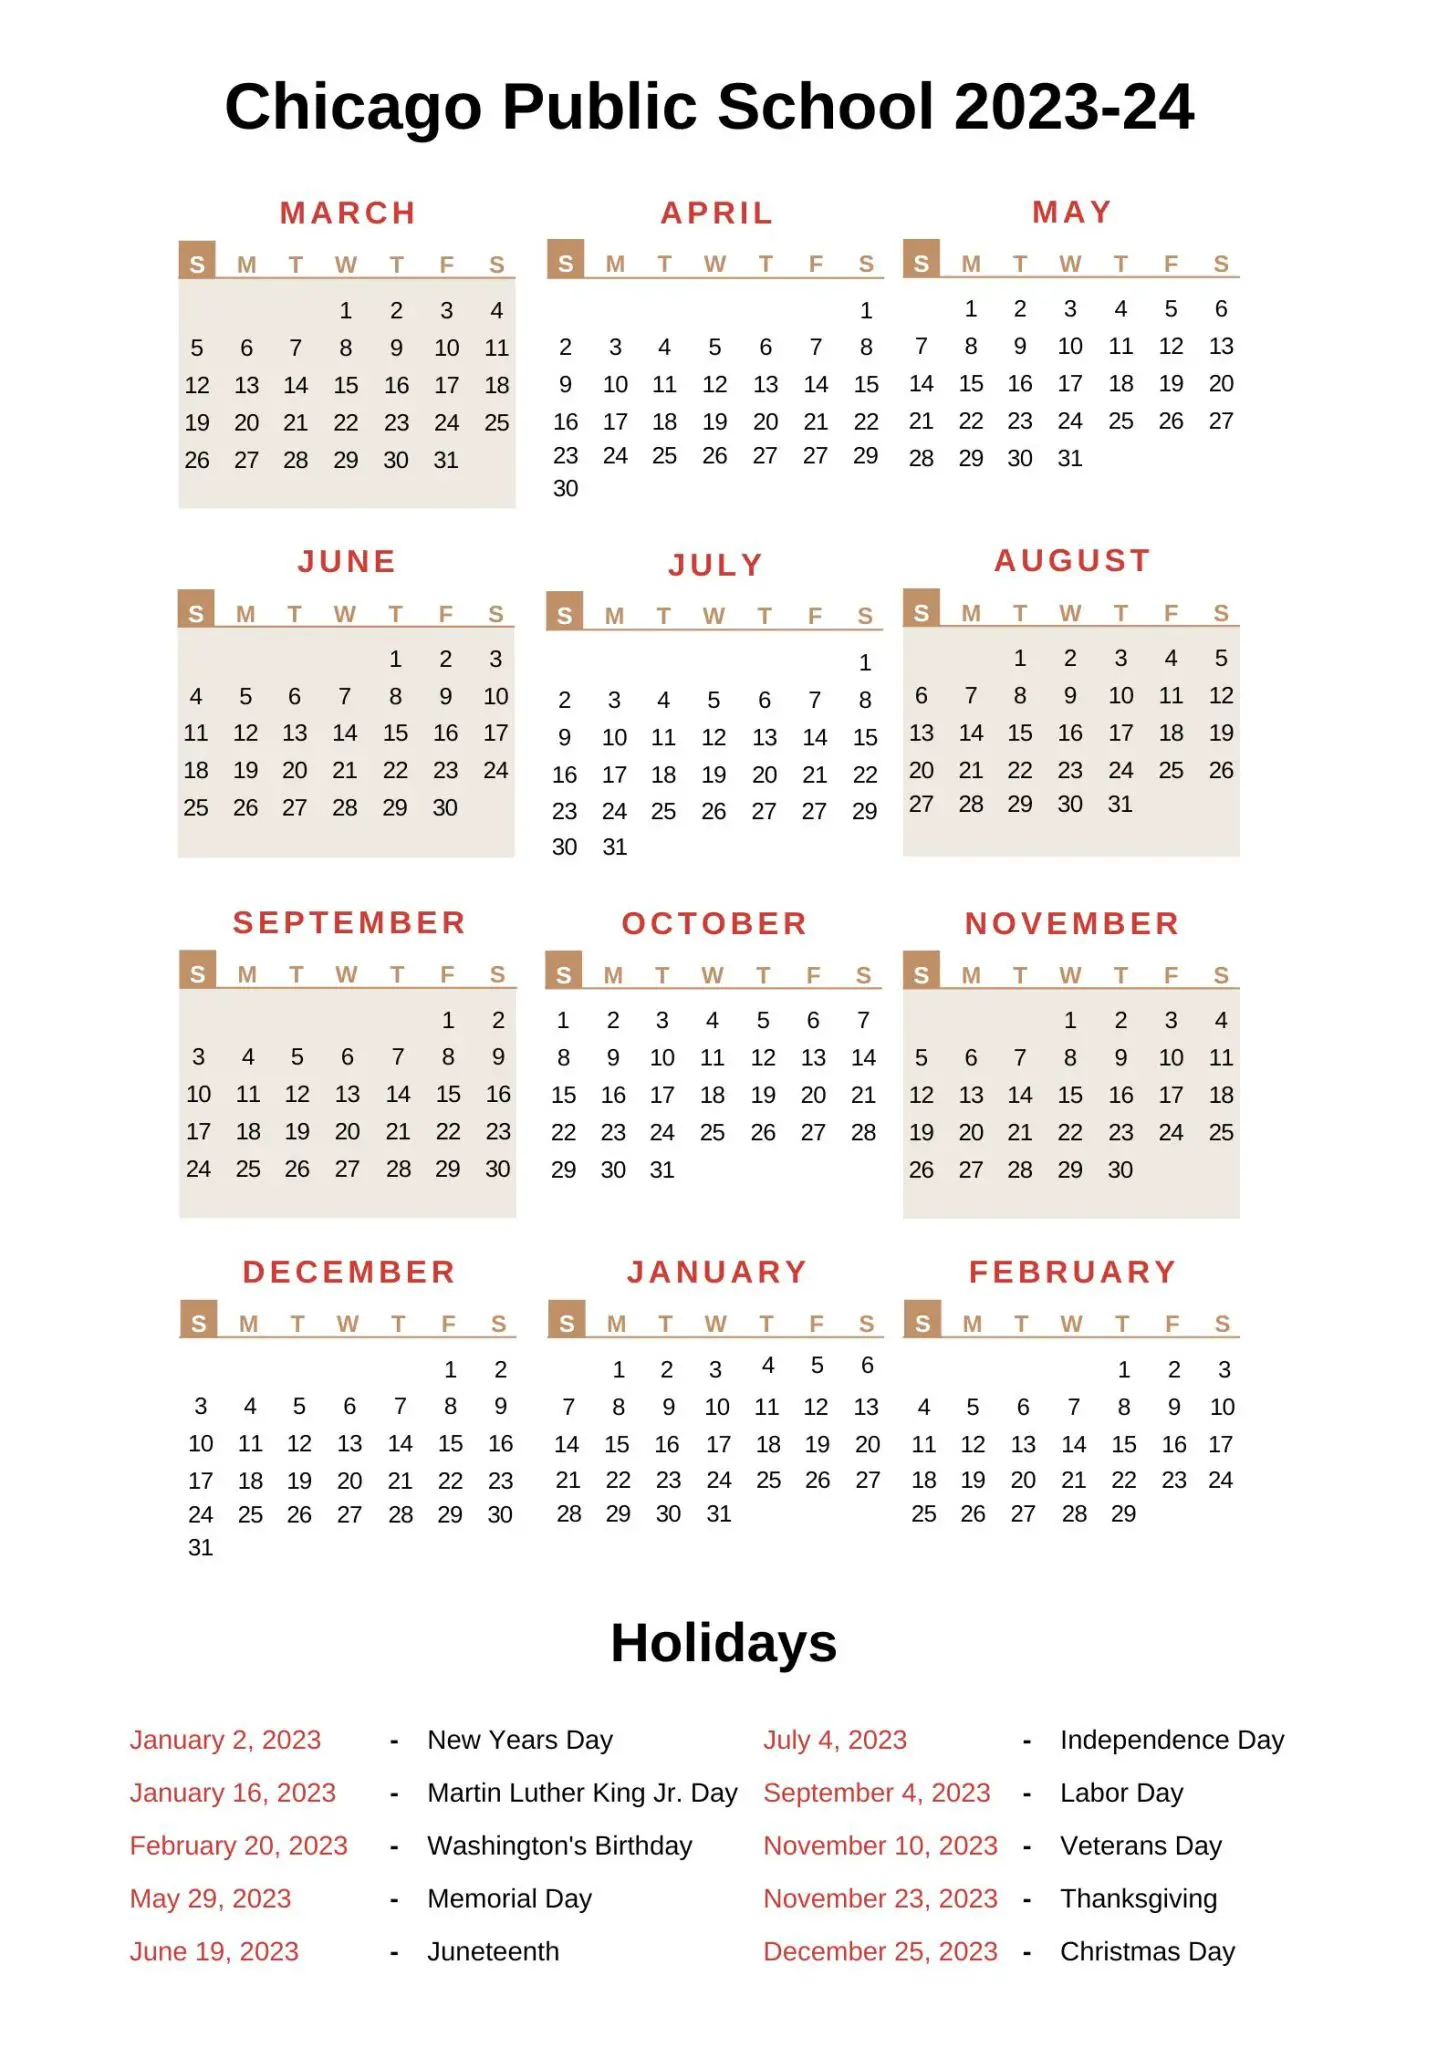 Chicago Public Schools Calendar 202324 with Holidays